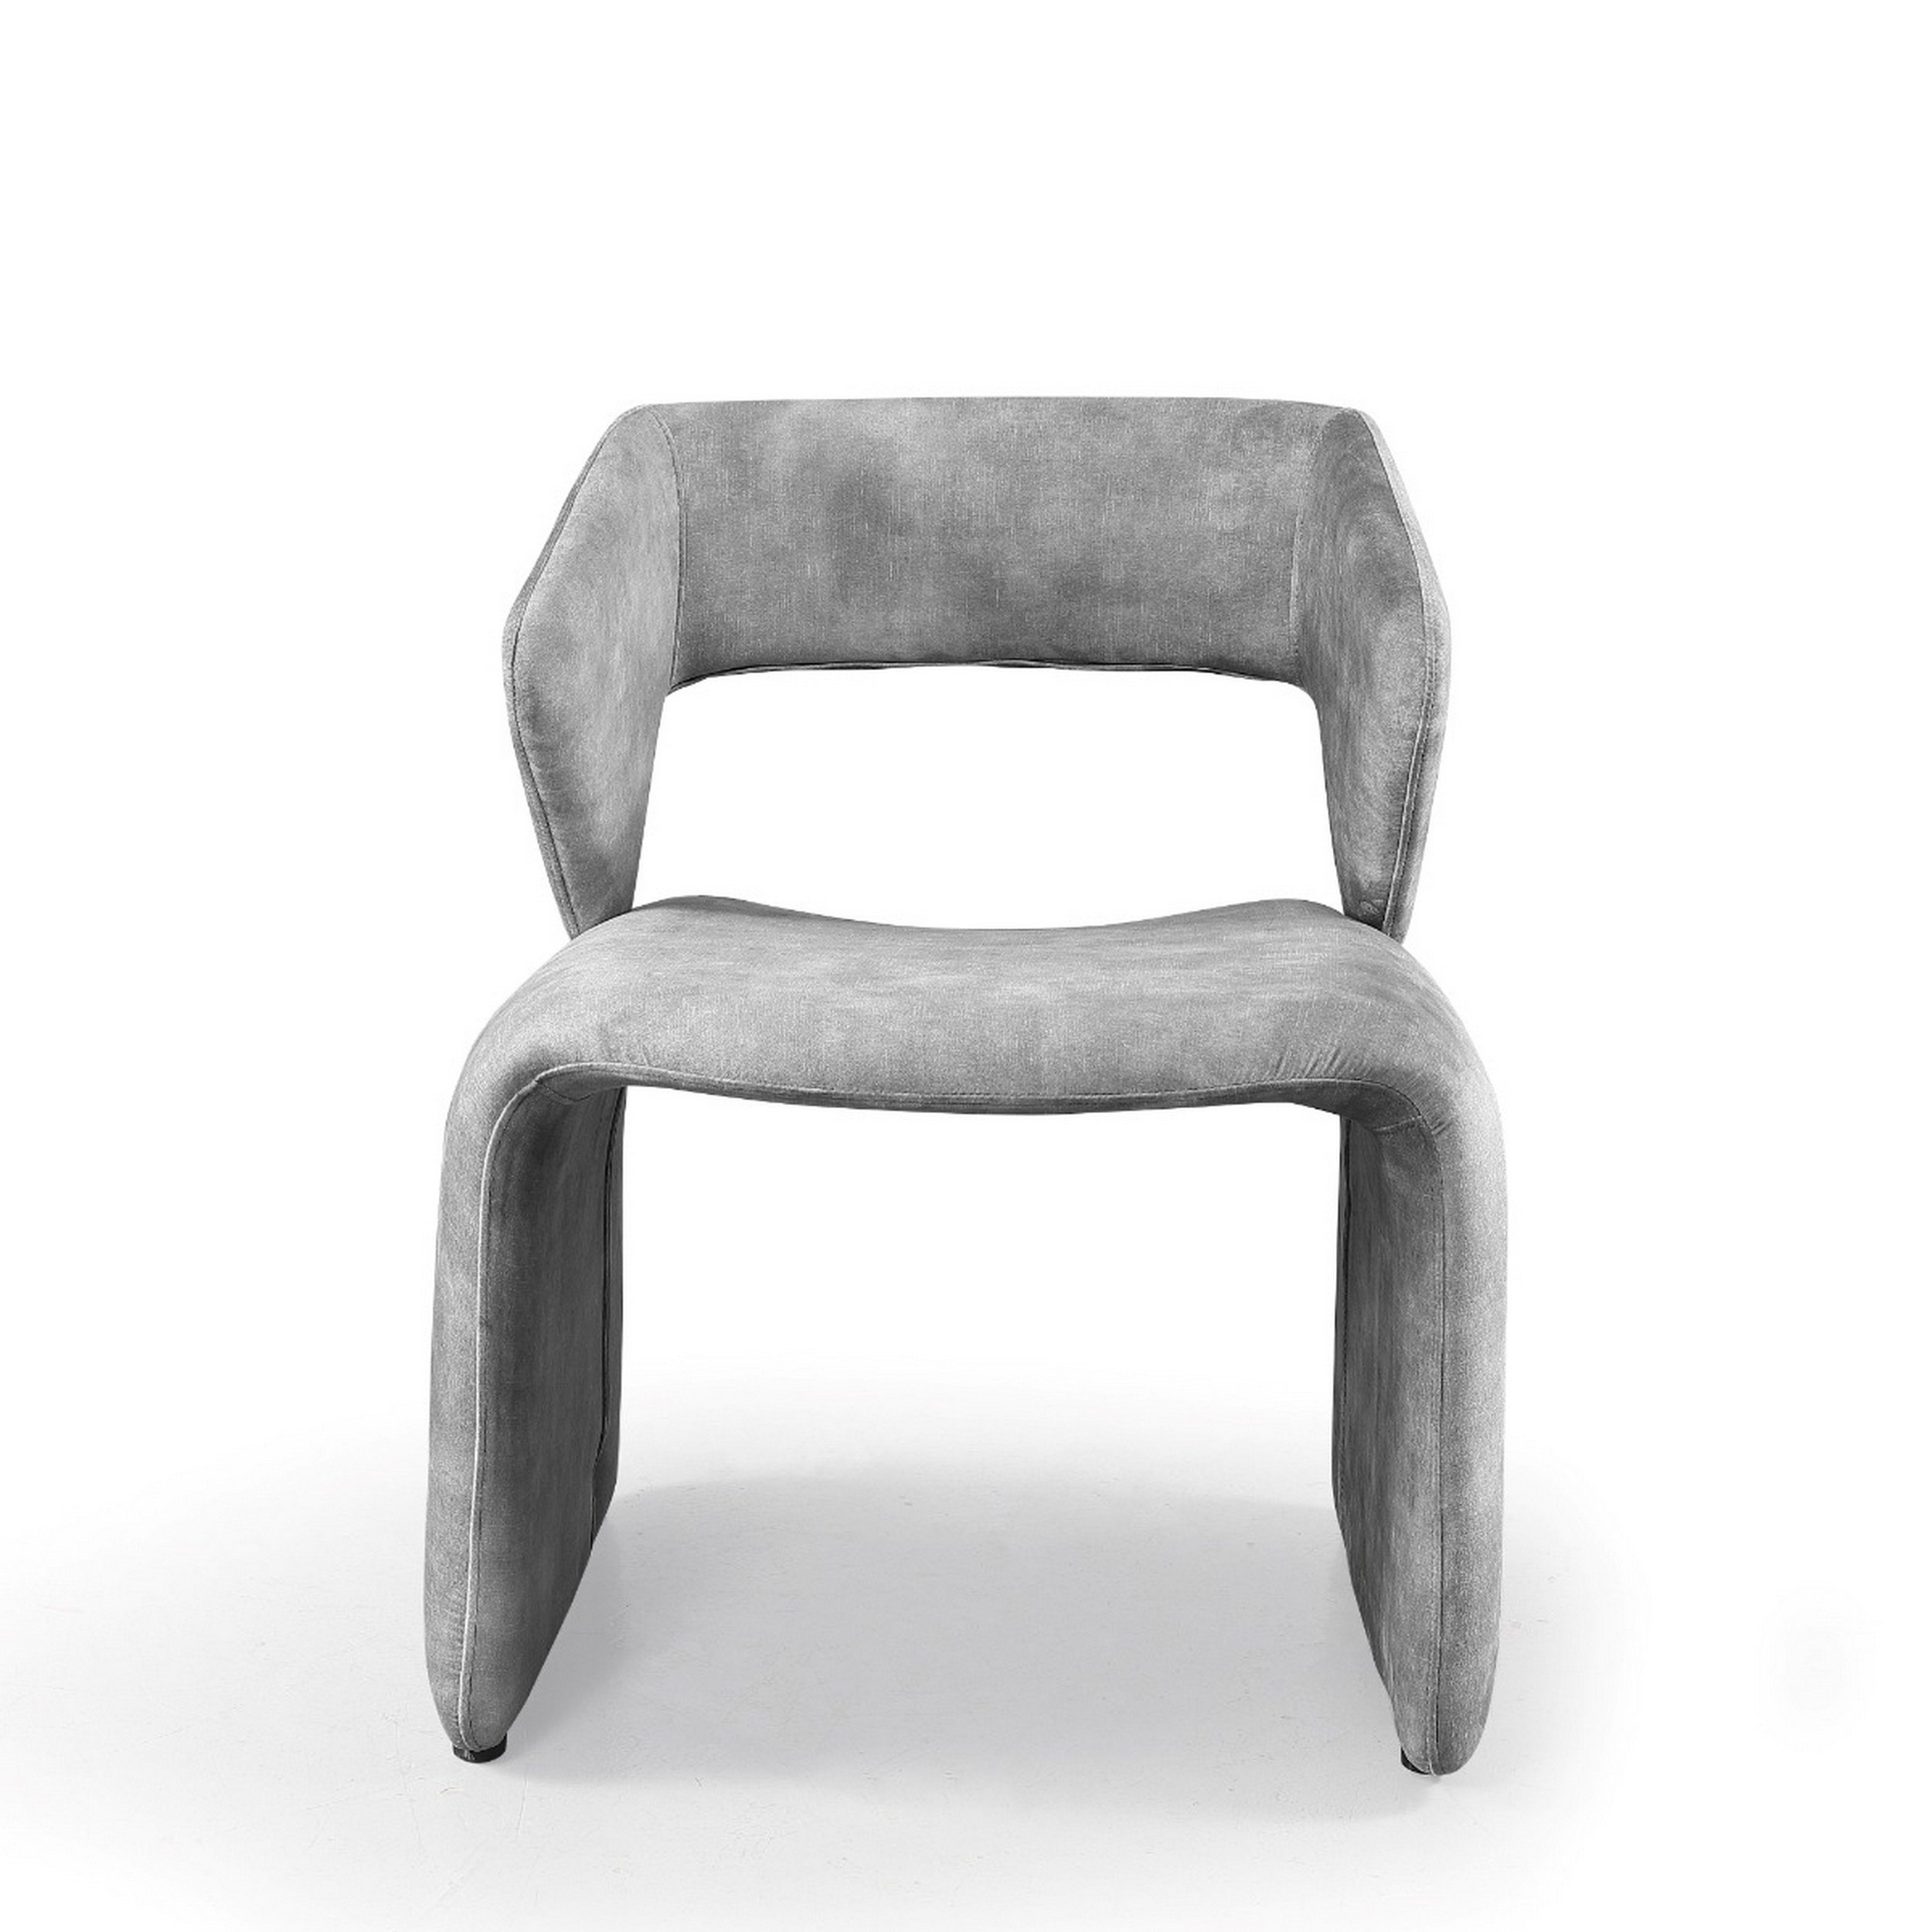 26 Inch Accent Chair, Gray Polyester, Plush Seat, Unique Cutout Backrest- Saltoro Sherpi